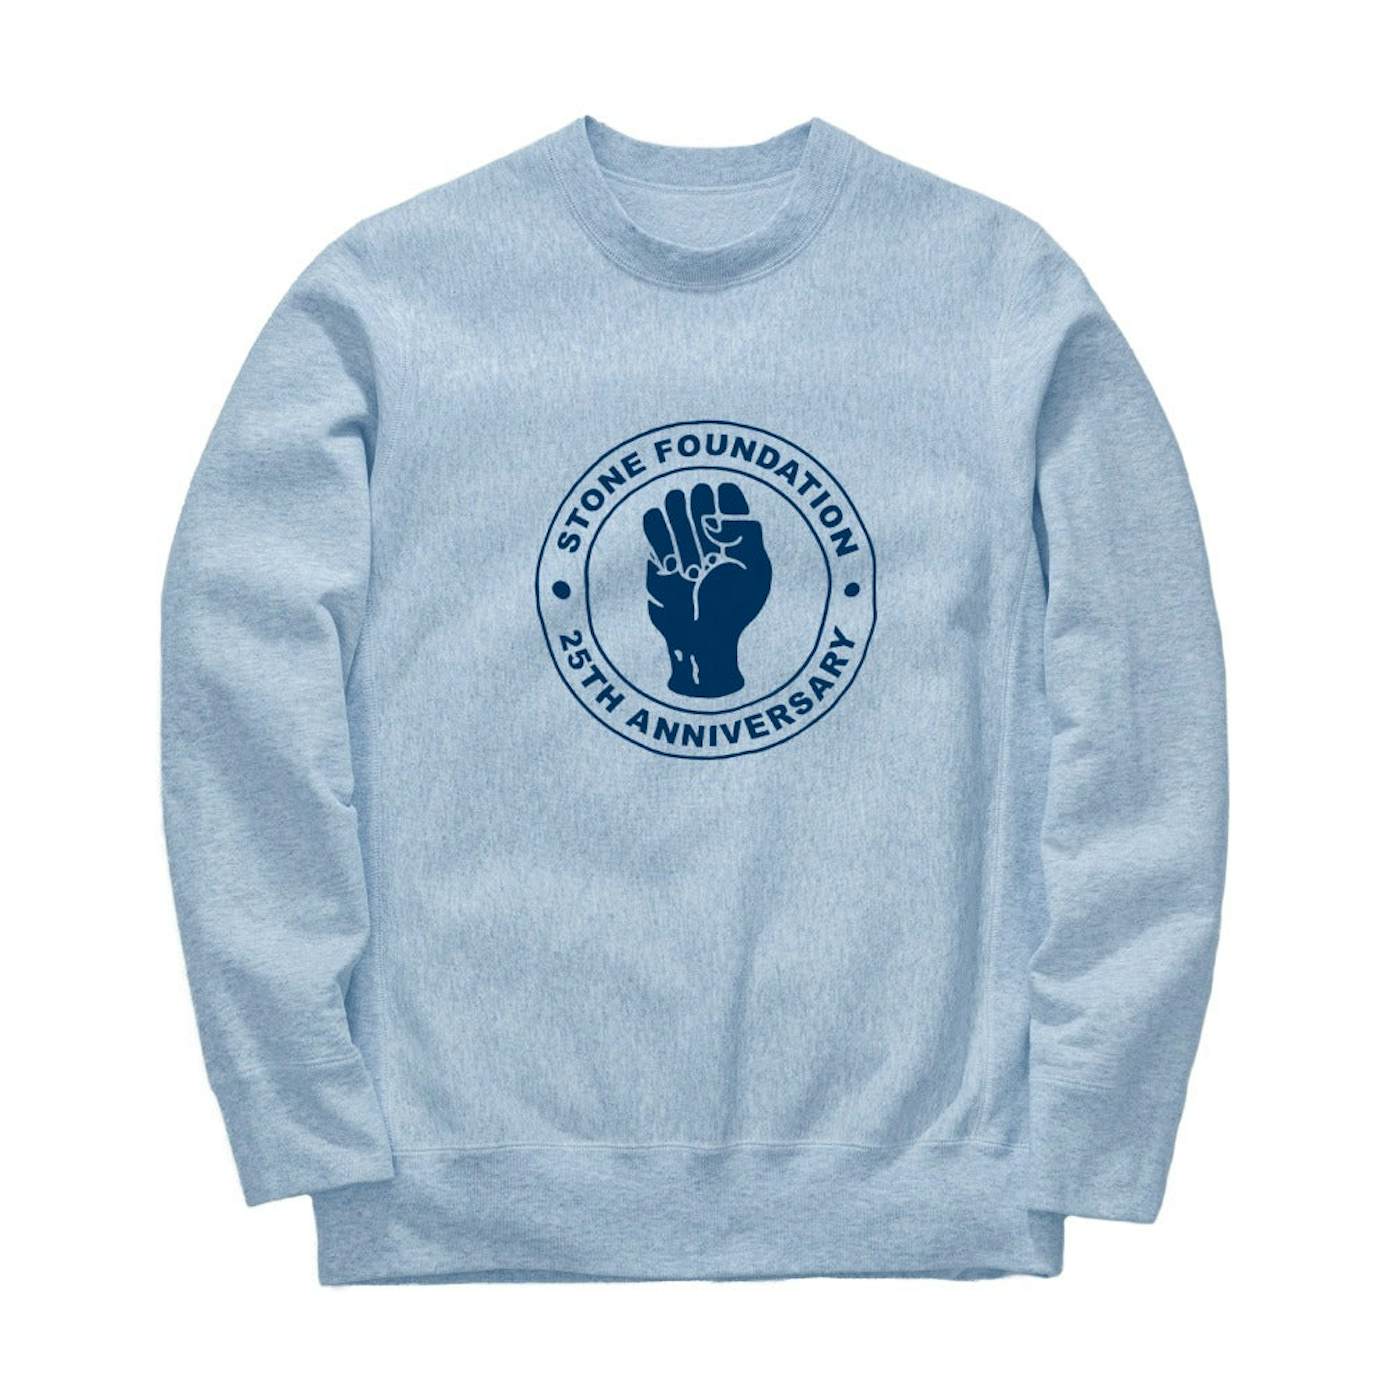 Stone Foundation 25th Anniversary Sweatshirt